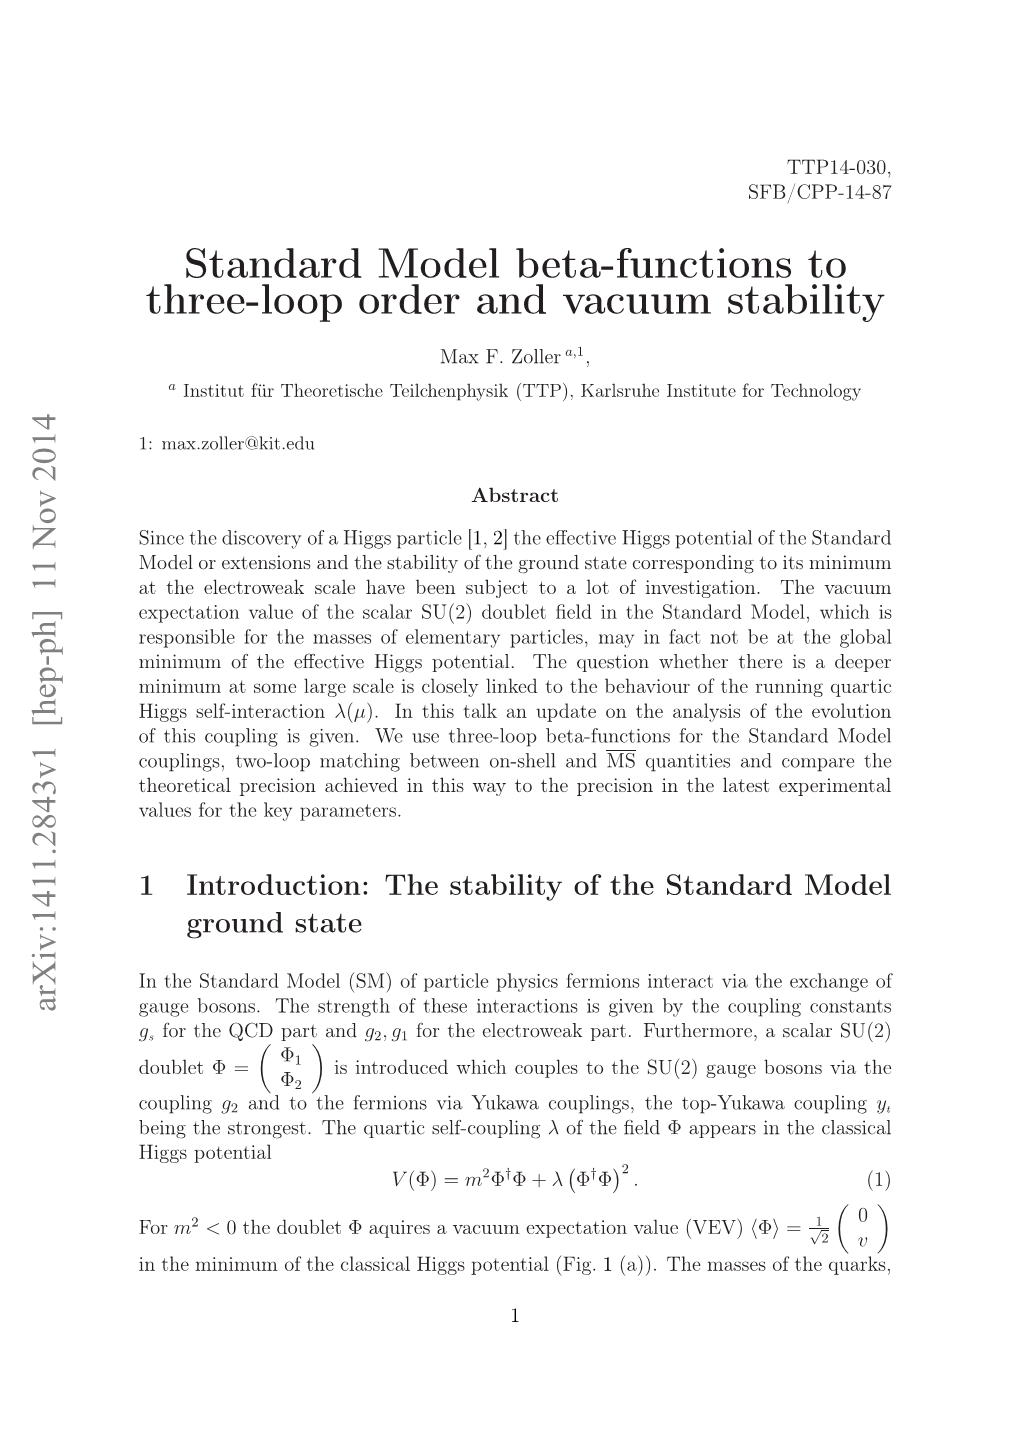 Standard Model Beta-Functions to Three-Loop Order and Vacuum Stability